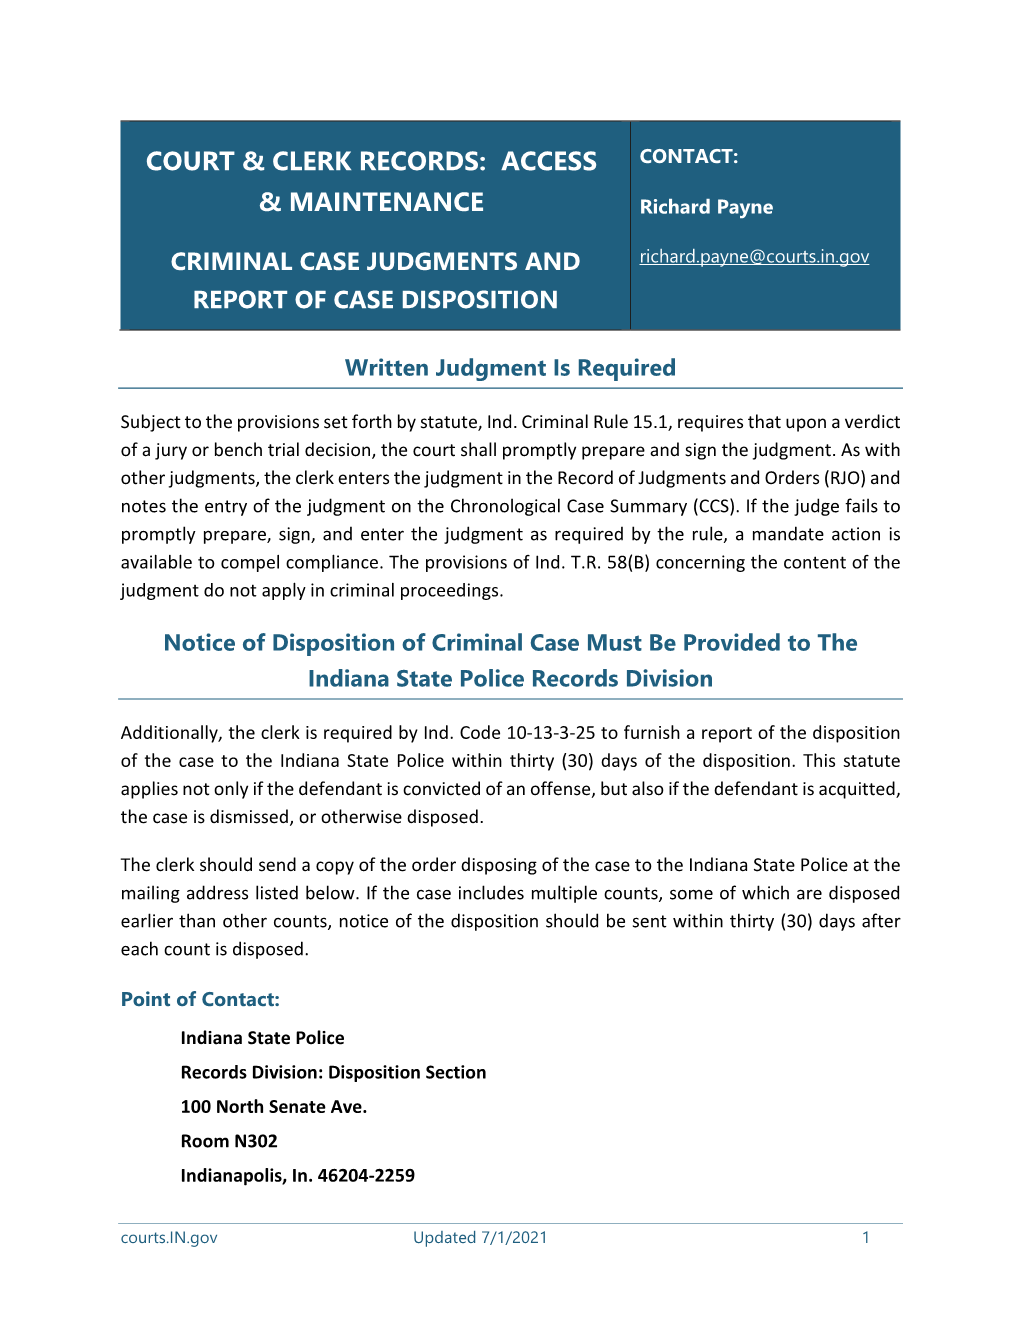 Court & Clerk Records: Access & Maintenance